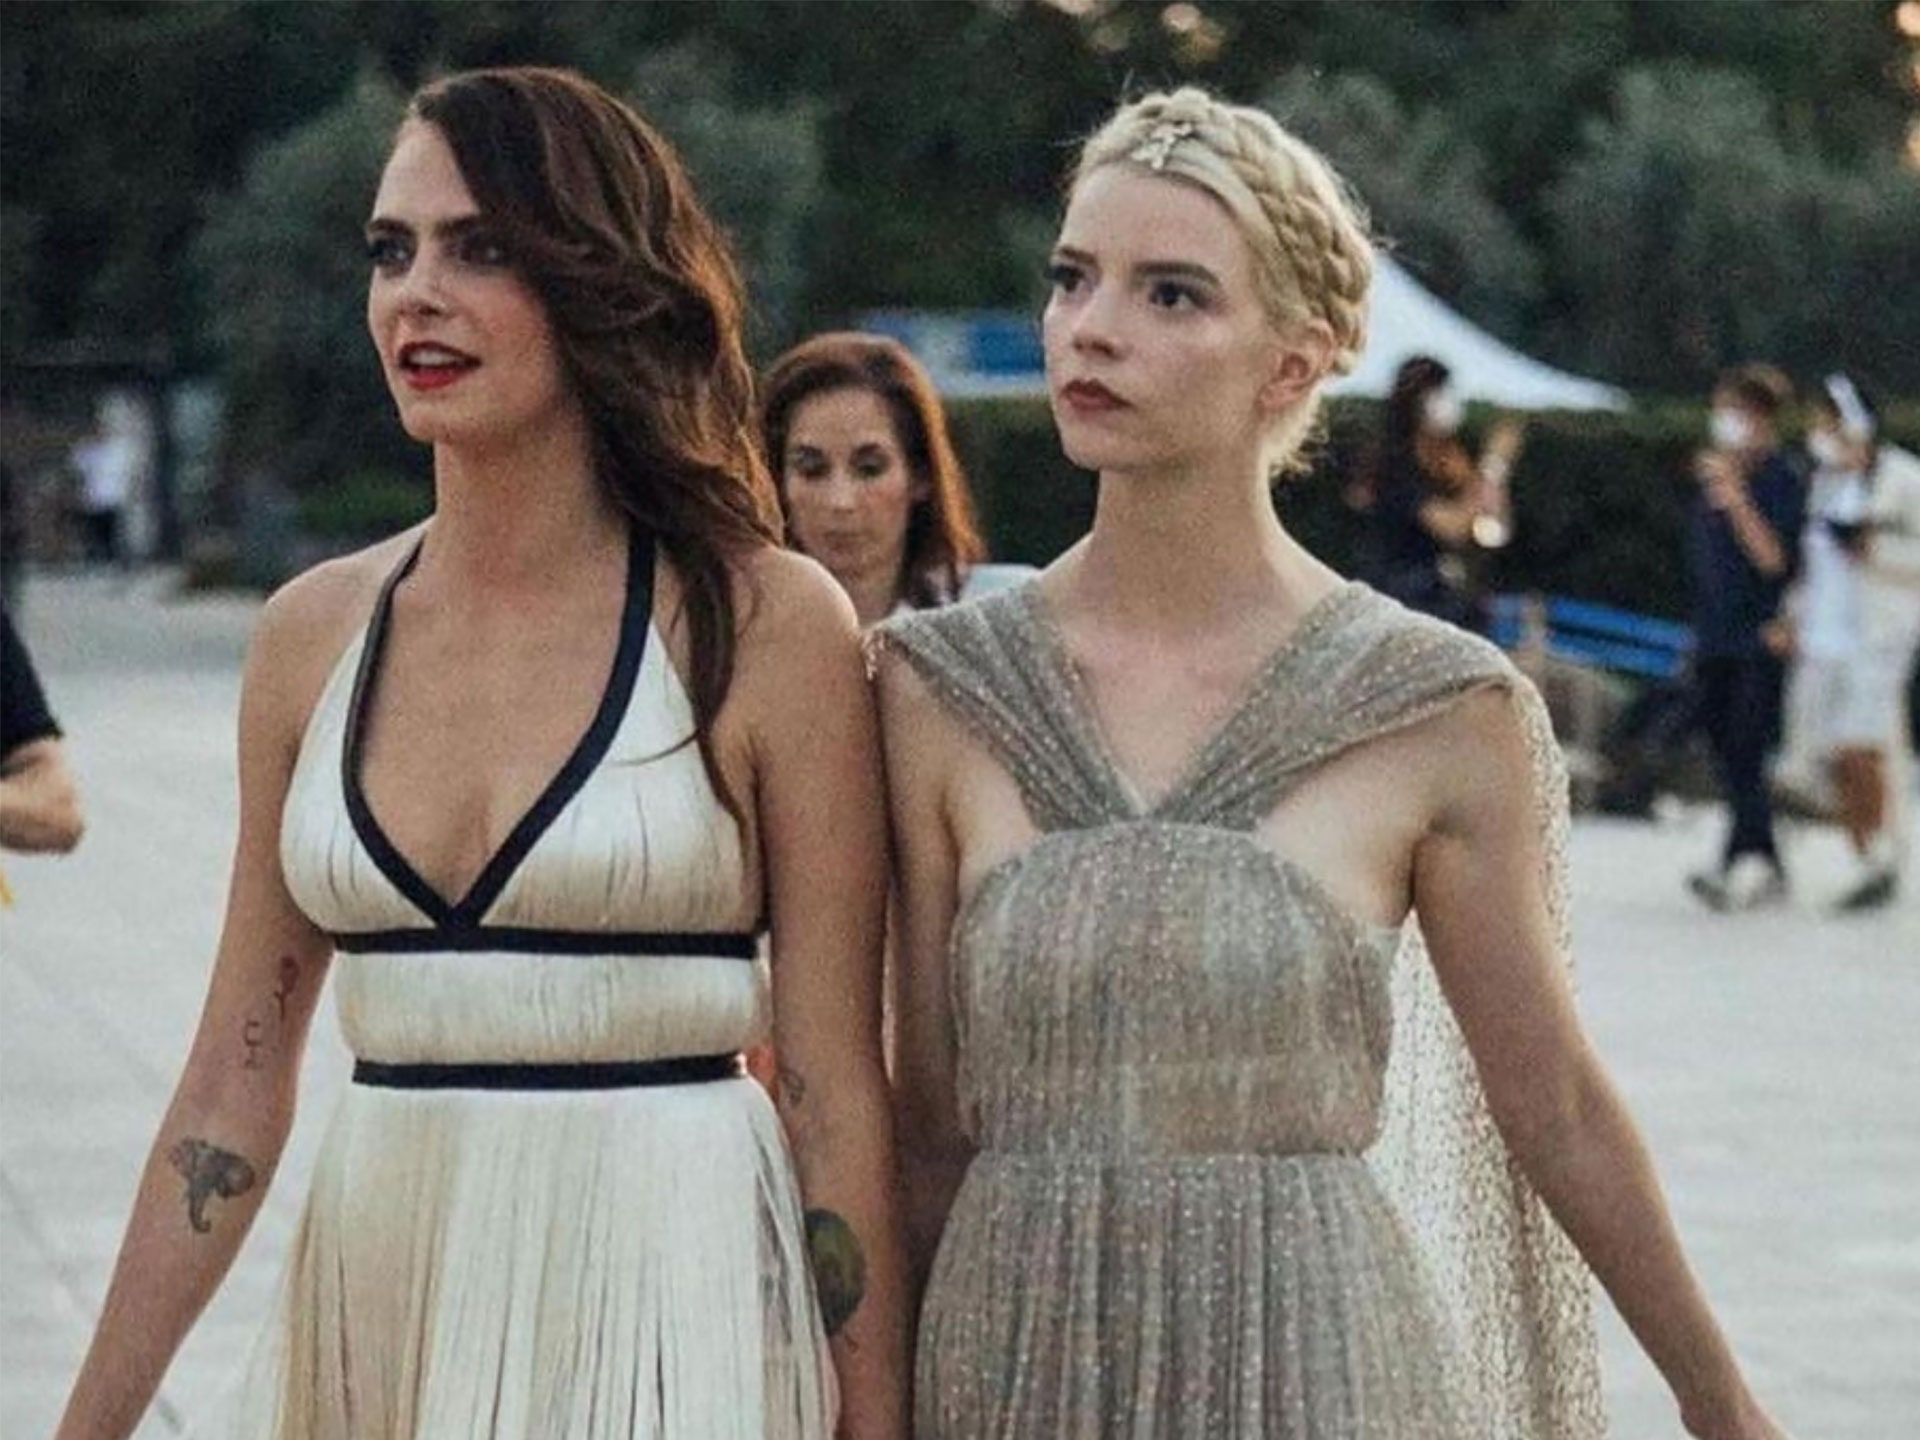 Cara Delevingne and girlfriend Ashley Benson walking arm in arm at a wedding. - Anya Taylor-Joy